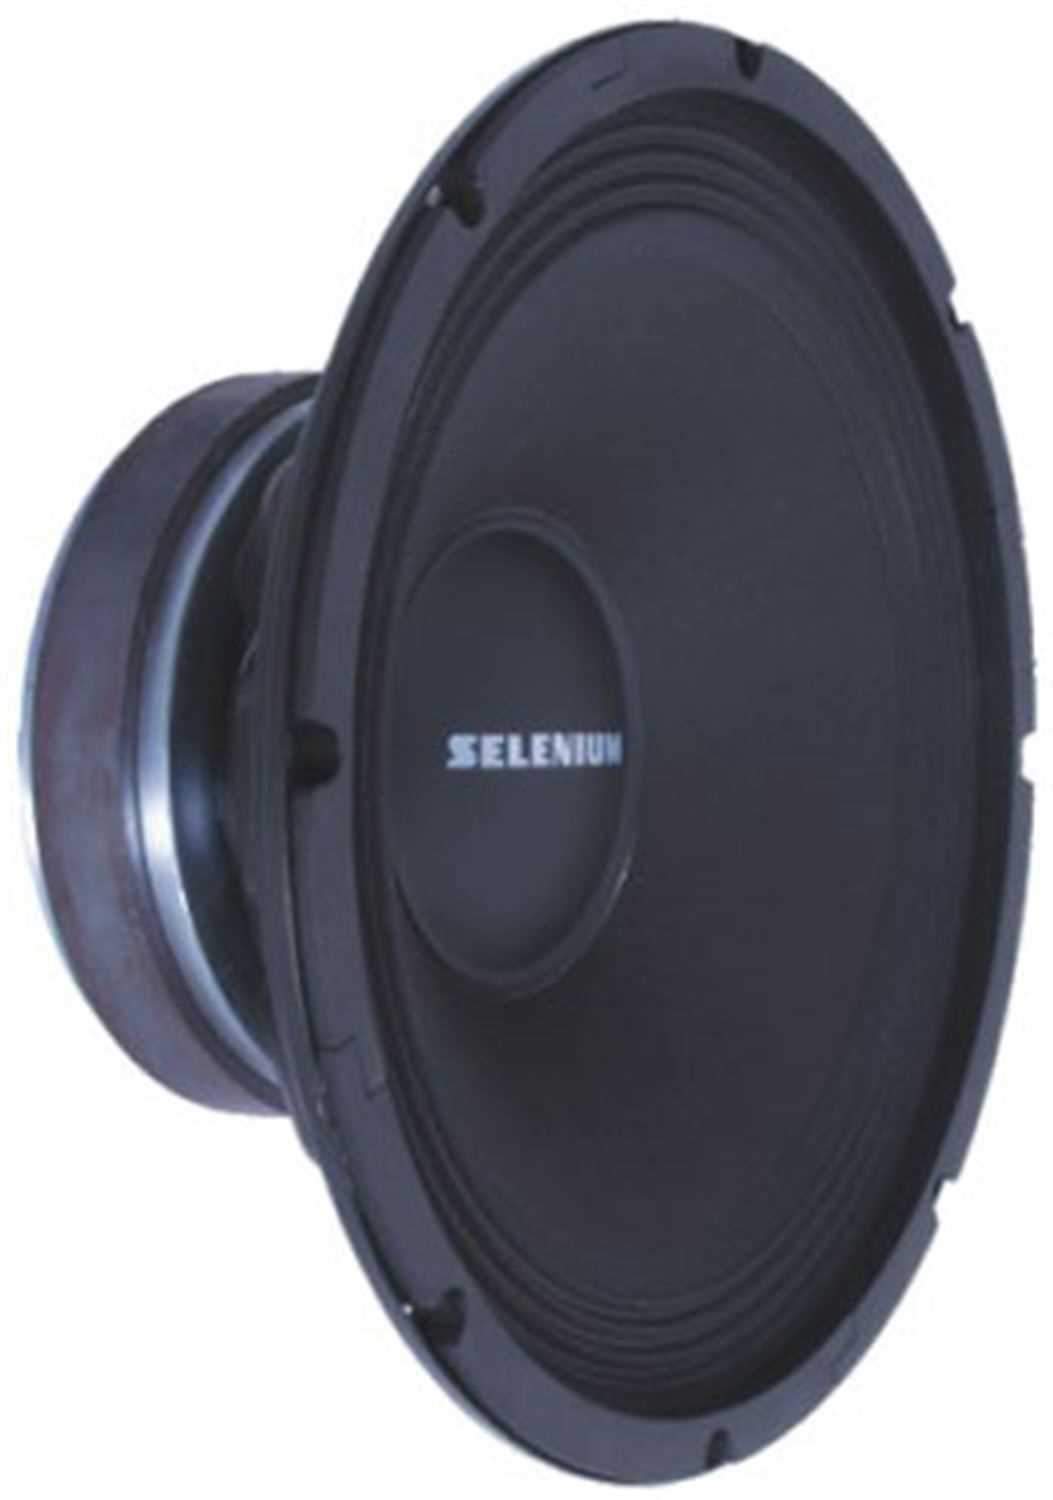 Selenium 12PW5 12-Inch Raw Fram Speaker 300-Watts - ProSound and Stage Lighting